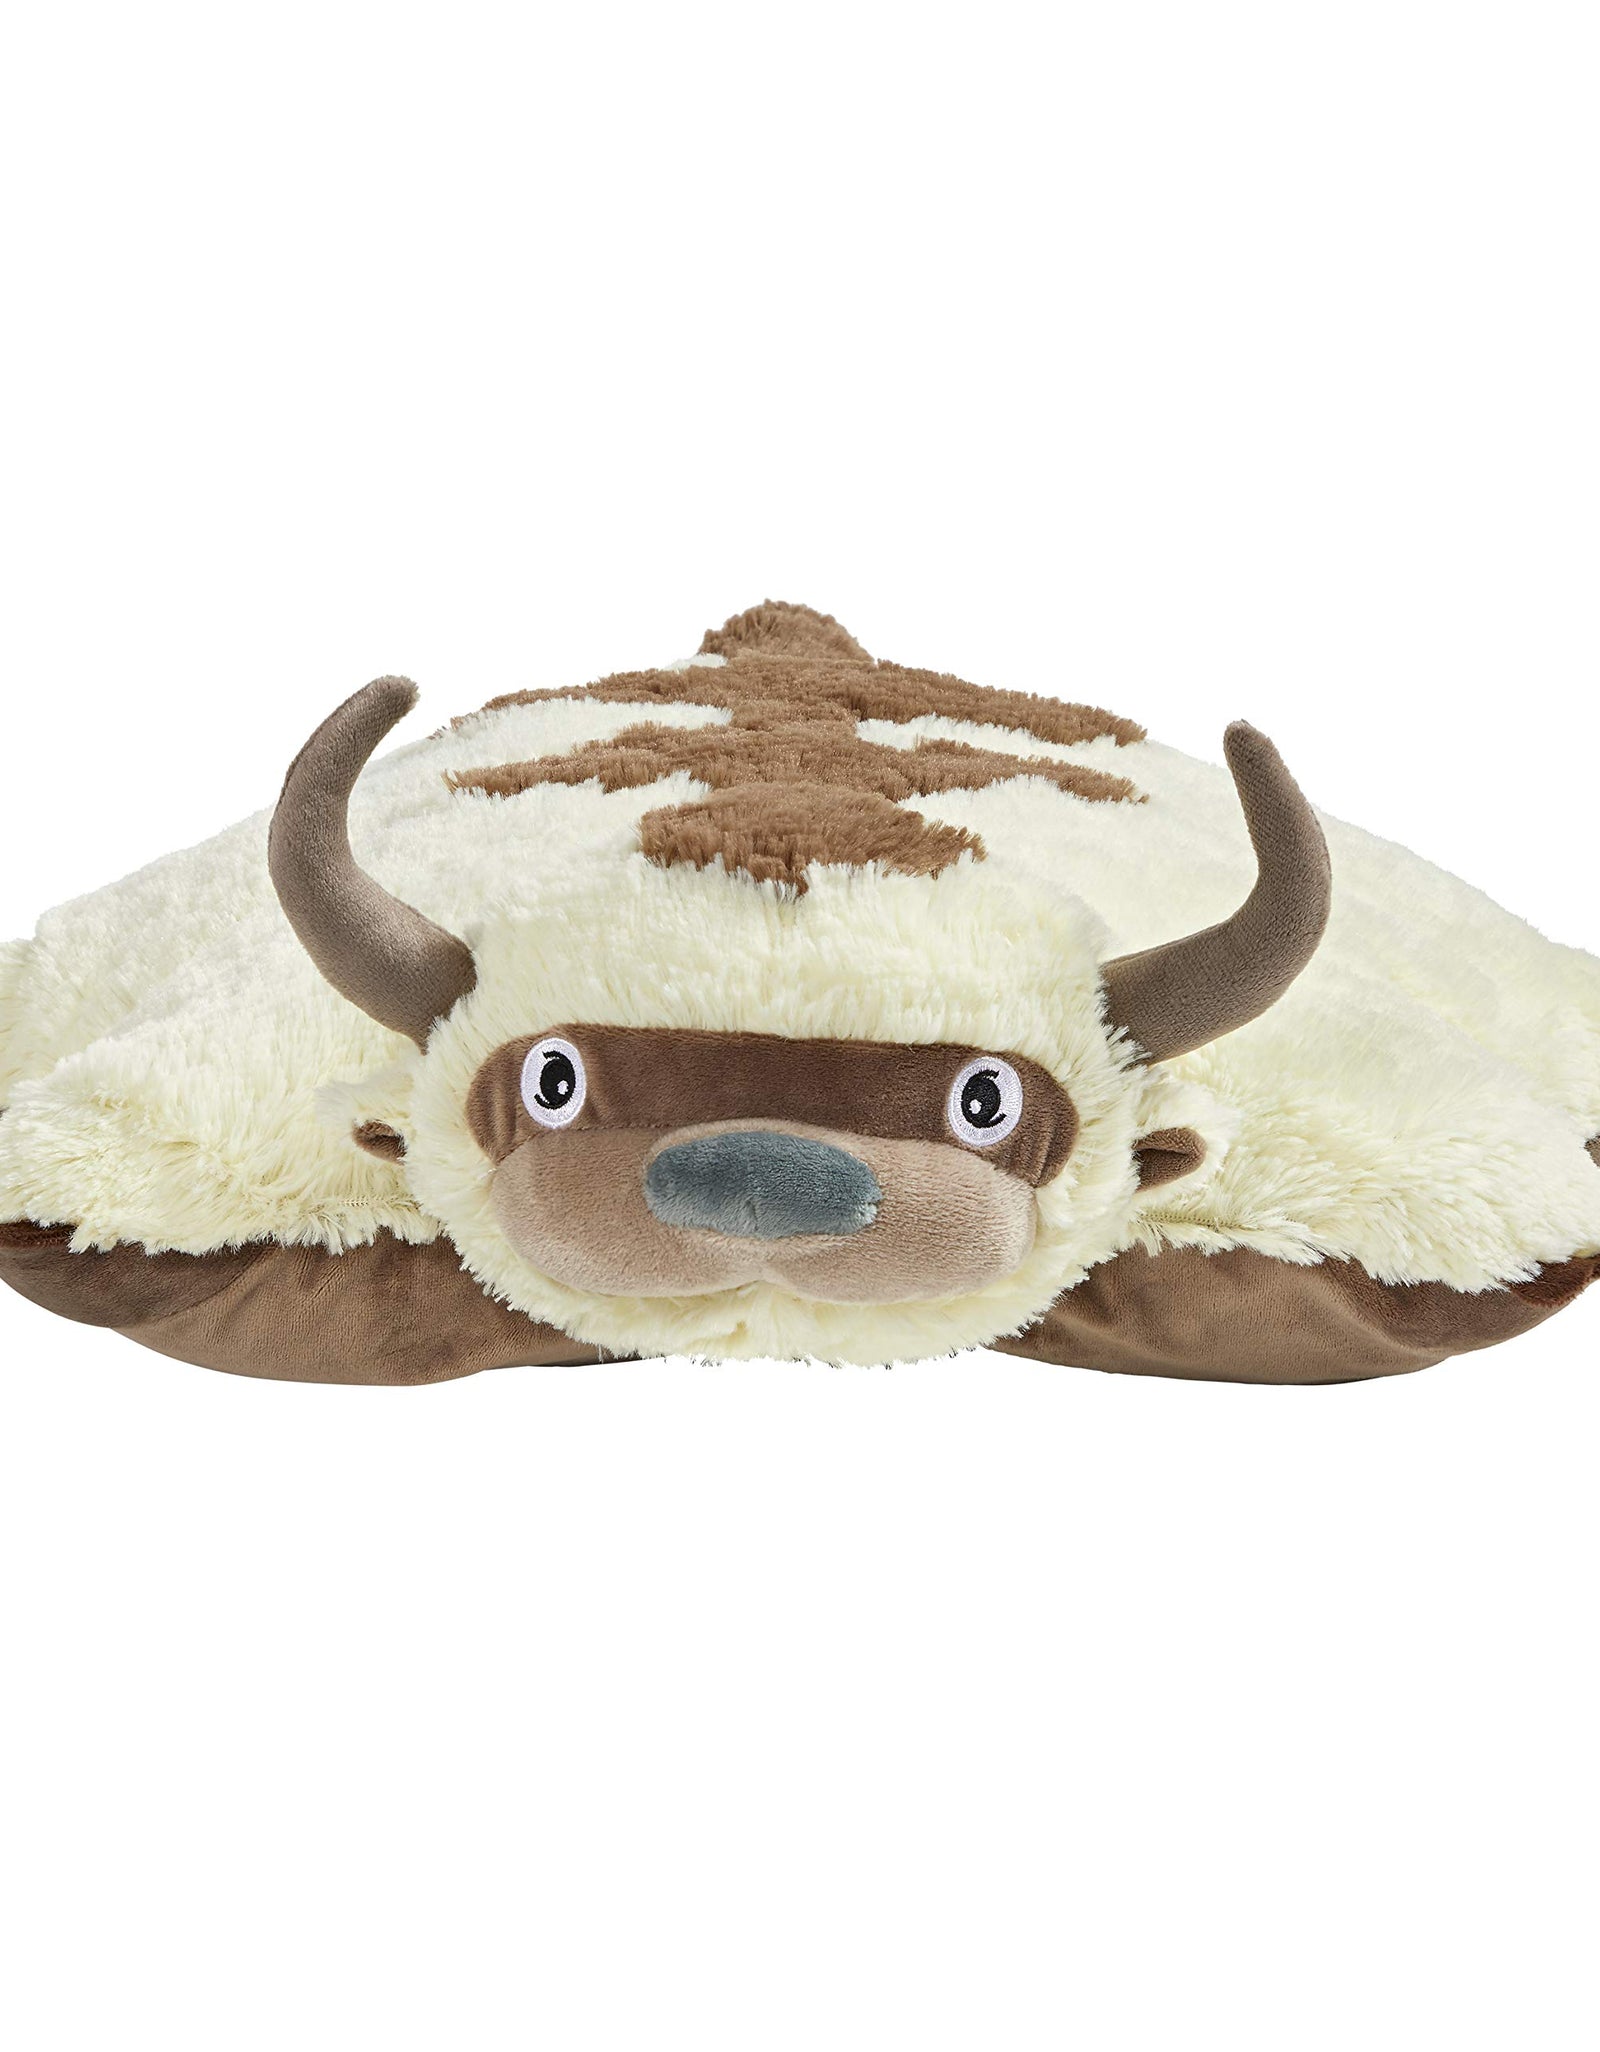 Pillow Pets 16” Appa Stuffed Animal, Nickelodeon Avatar The Last Airbender Plush Toy, White